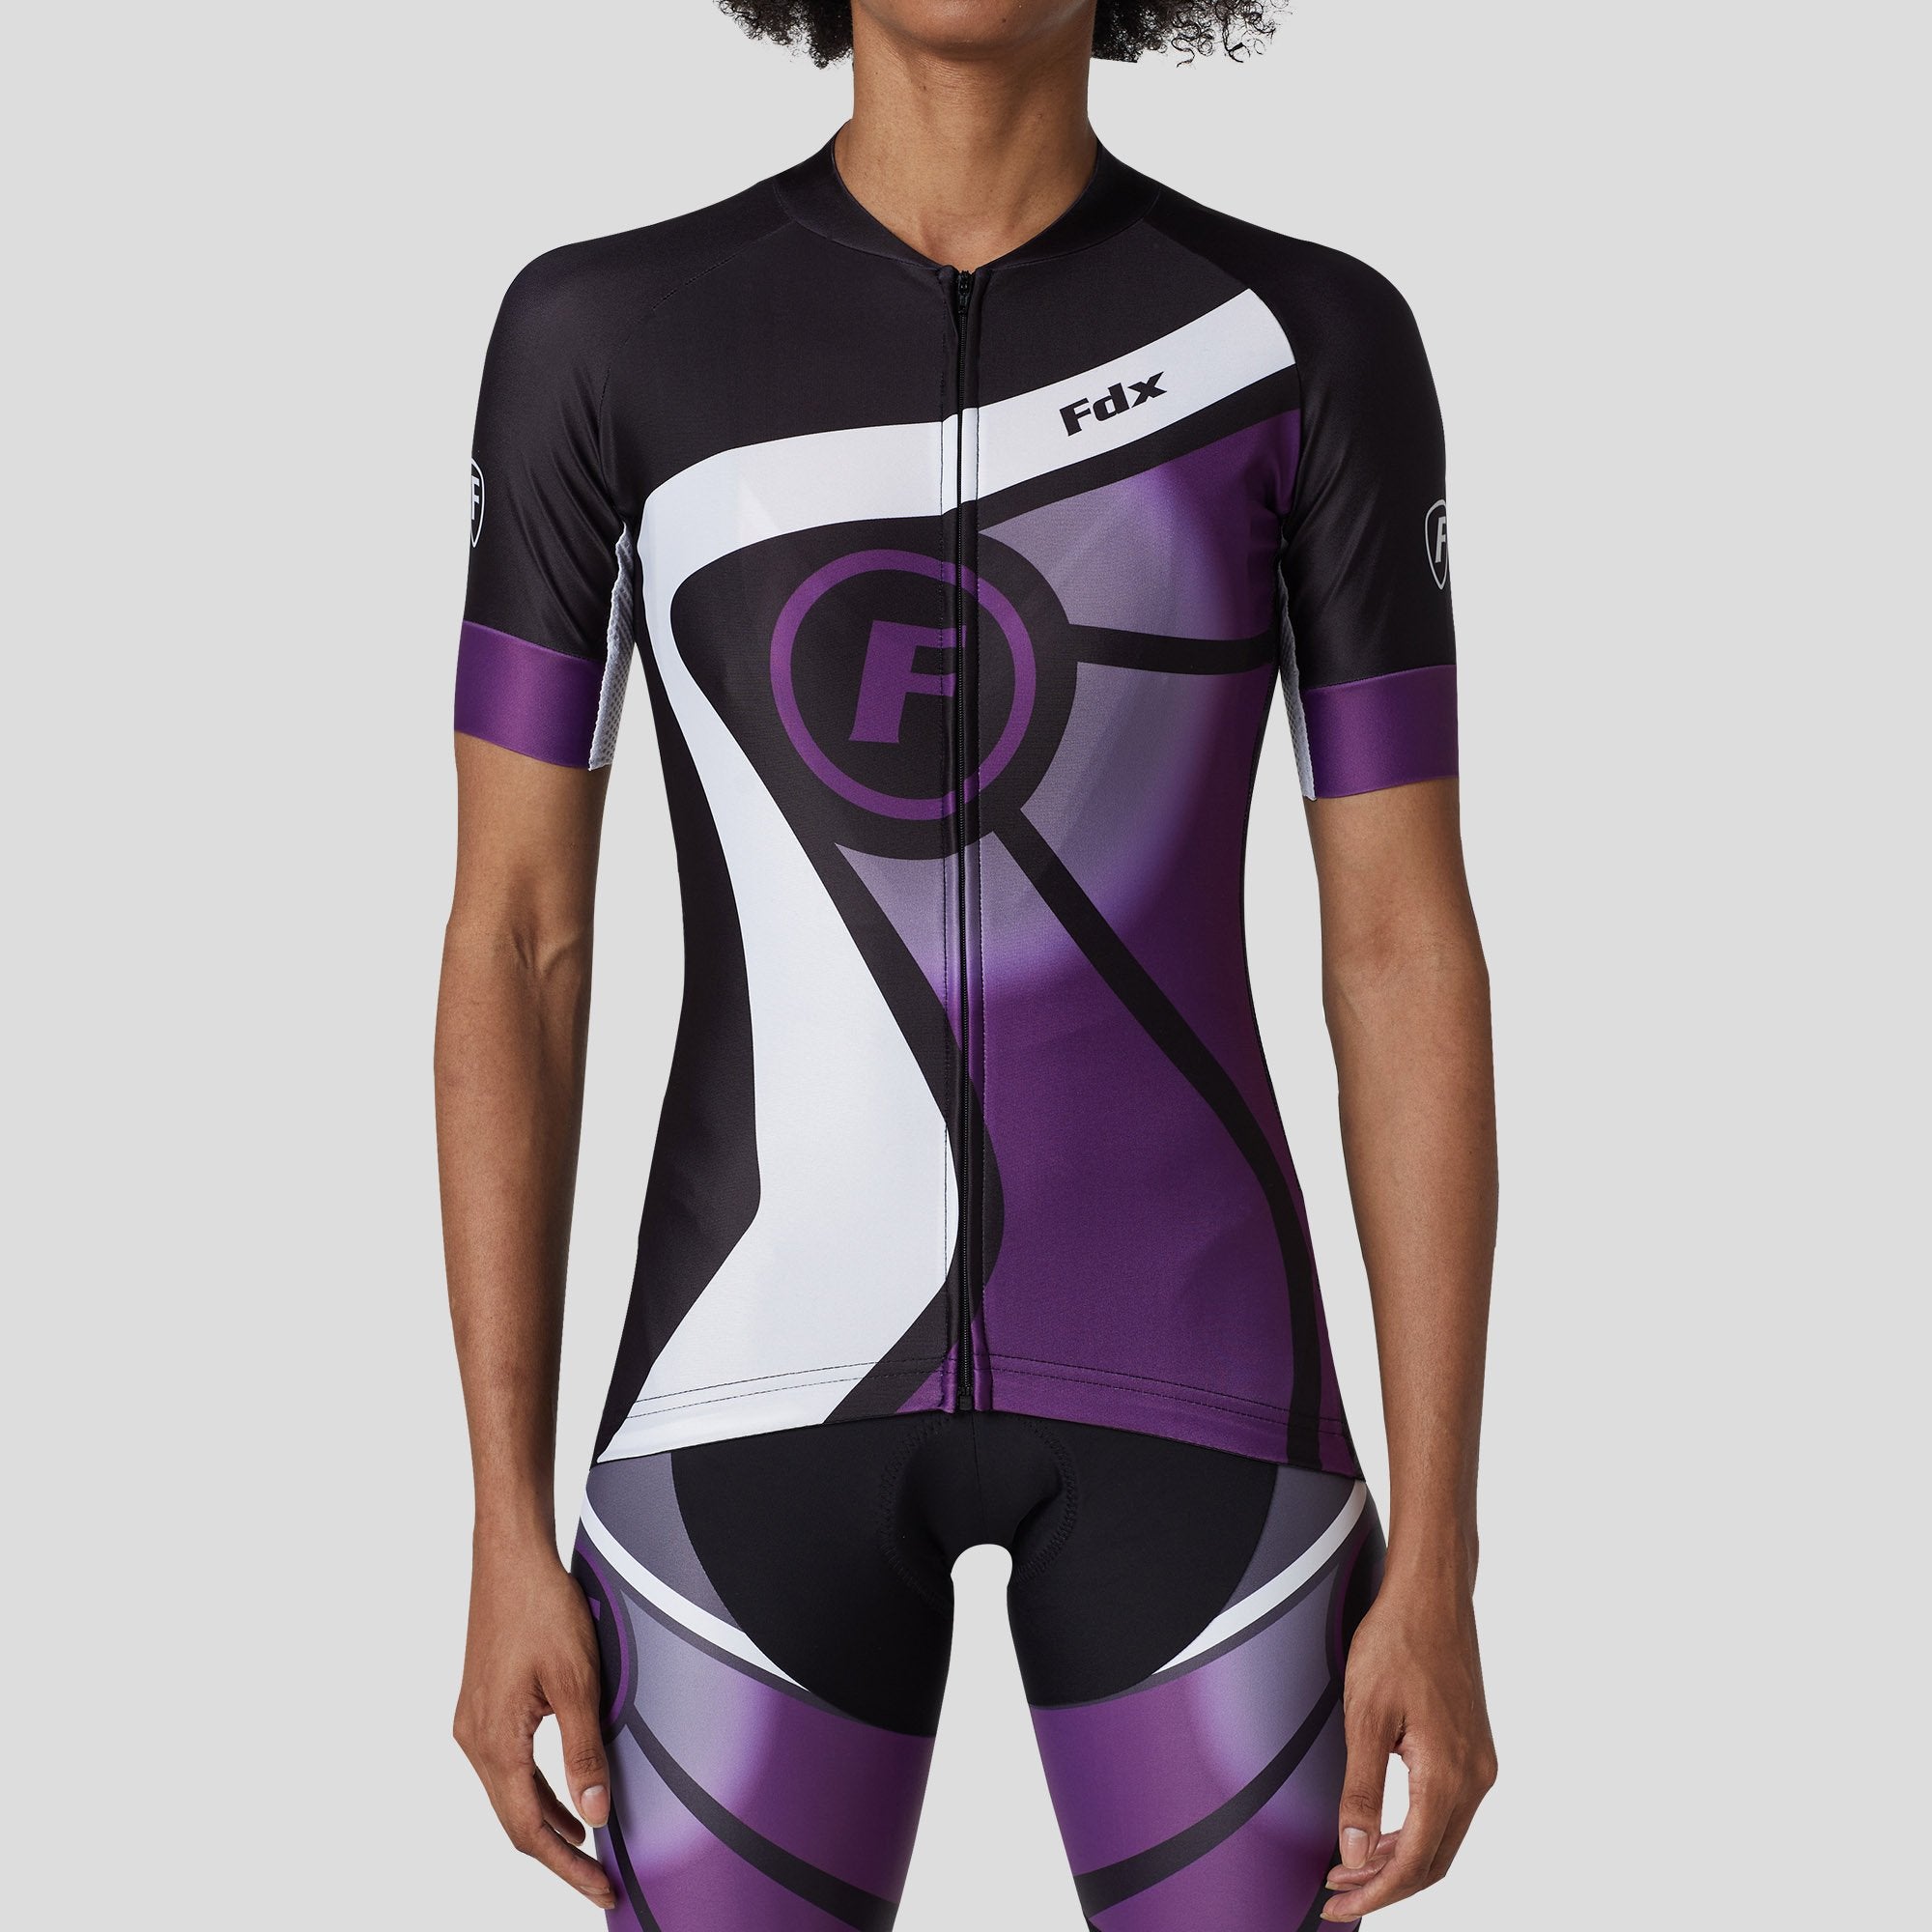 Fdx Signature Purple Women's Short Sleeve Summer Cycling Jersey